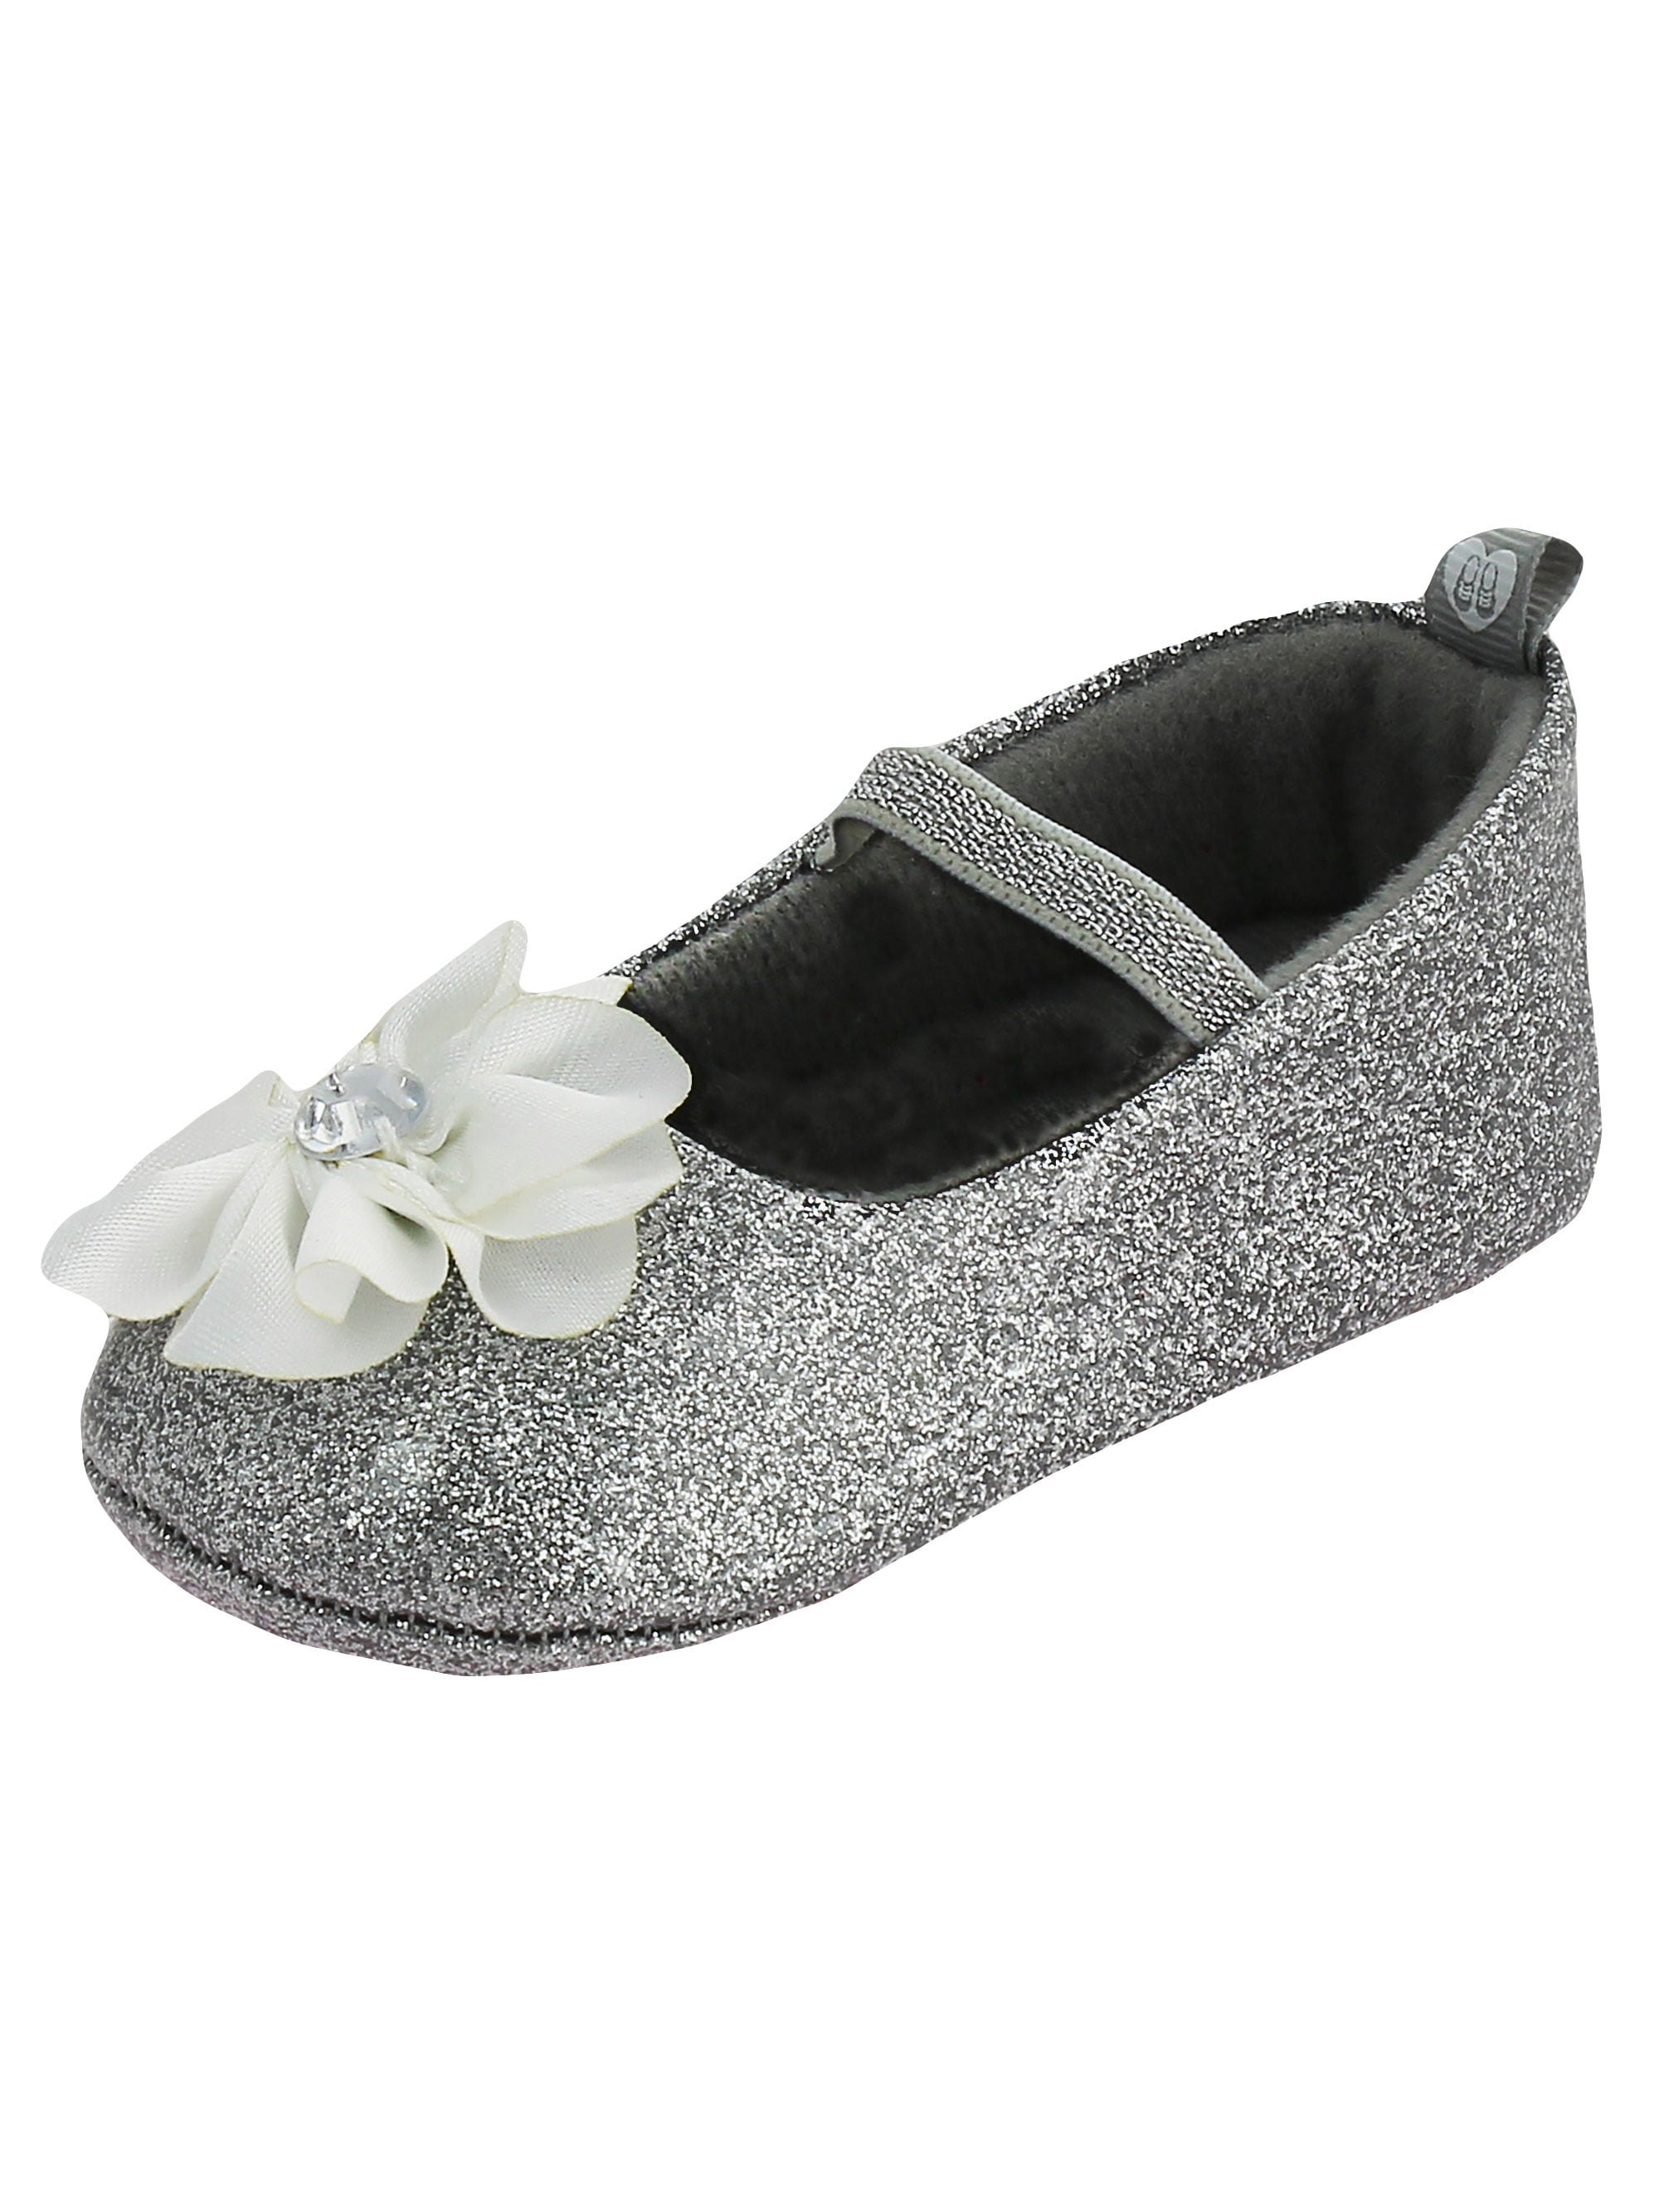 silver infant shoes size 4